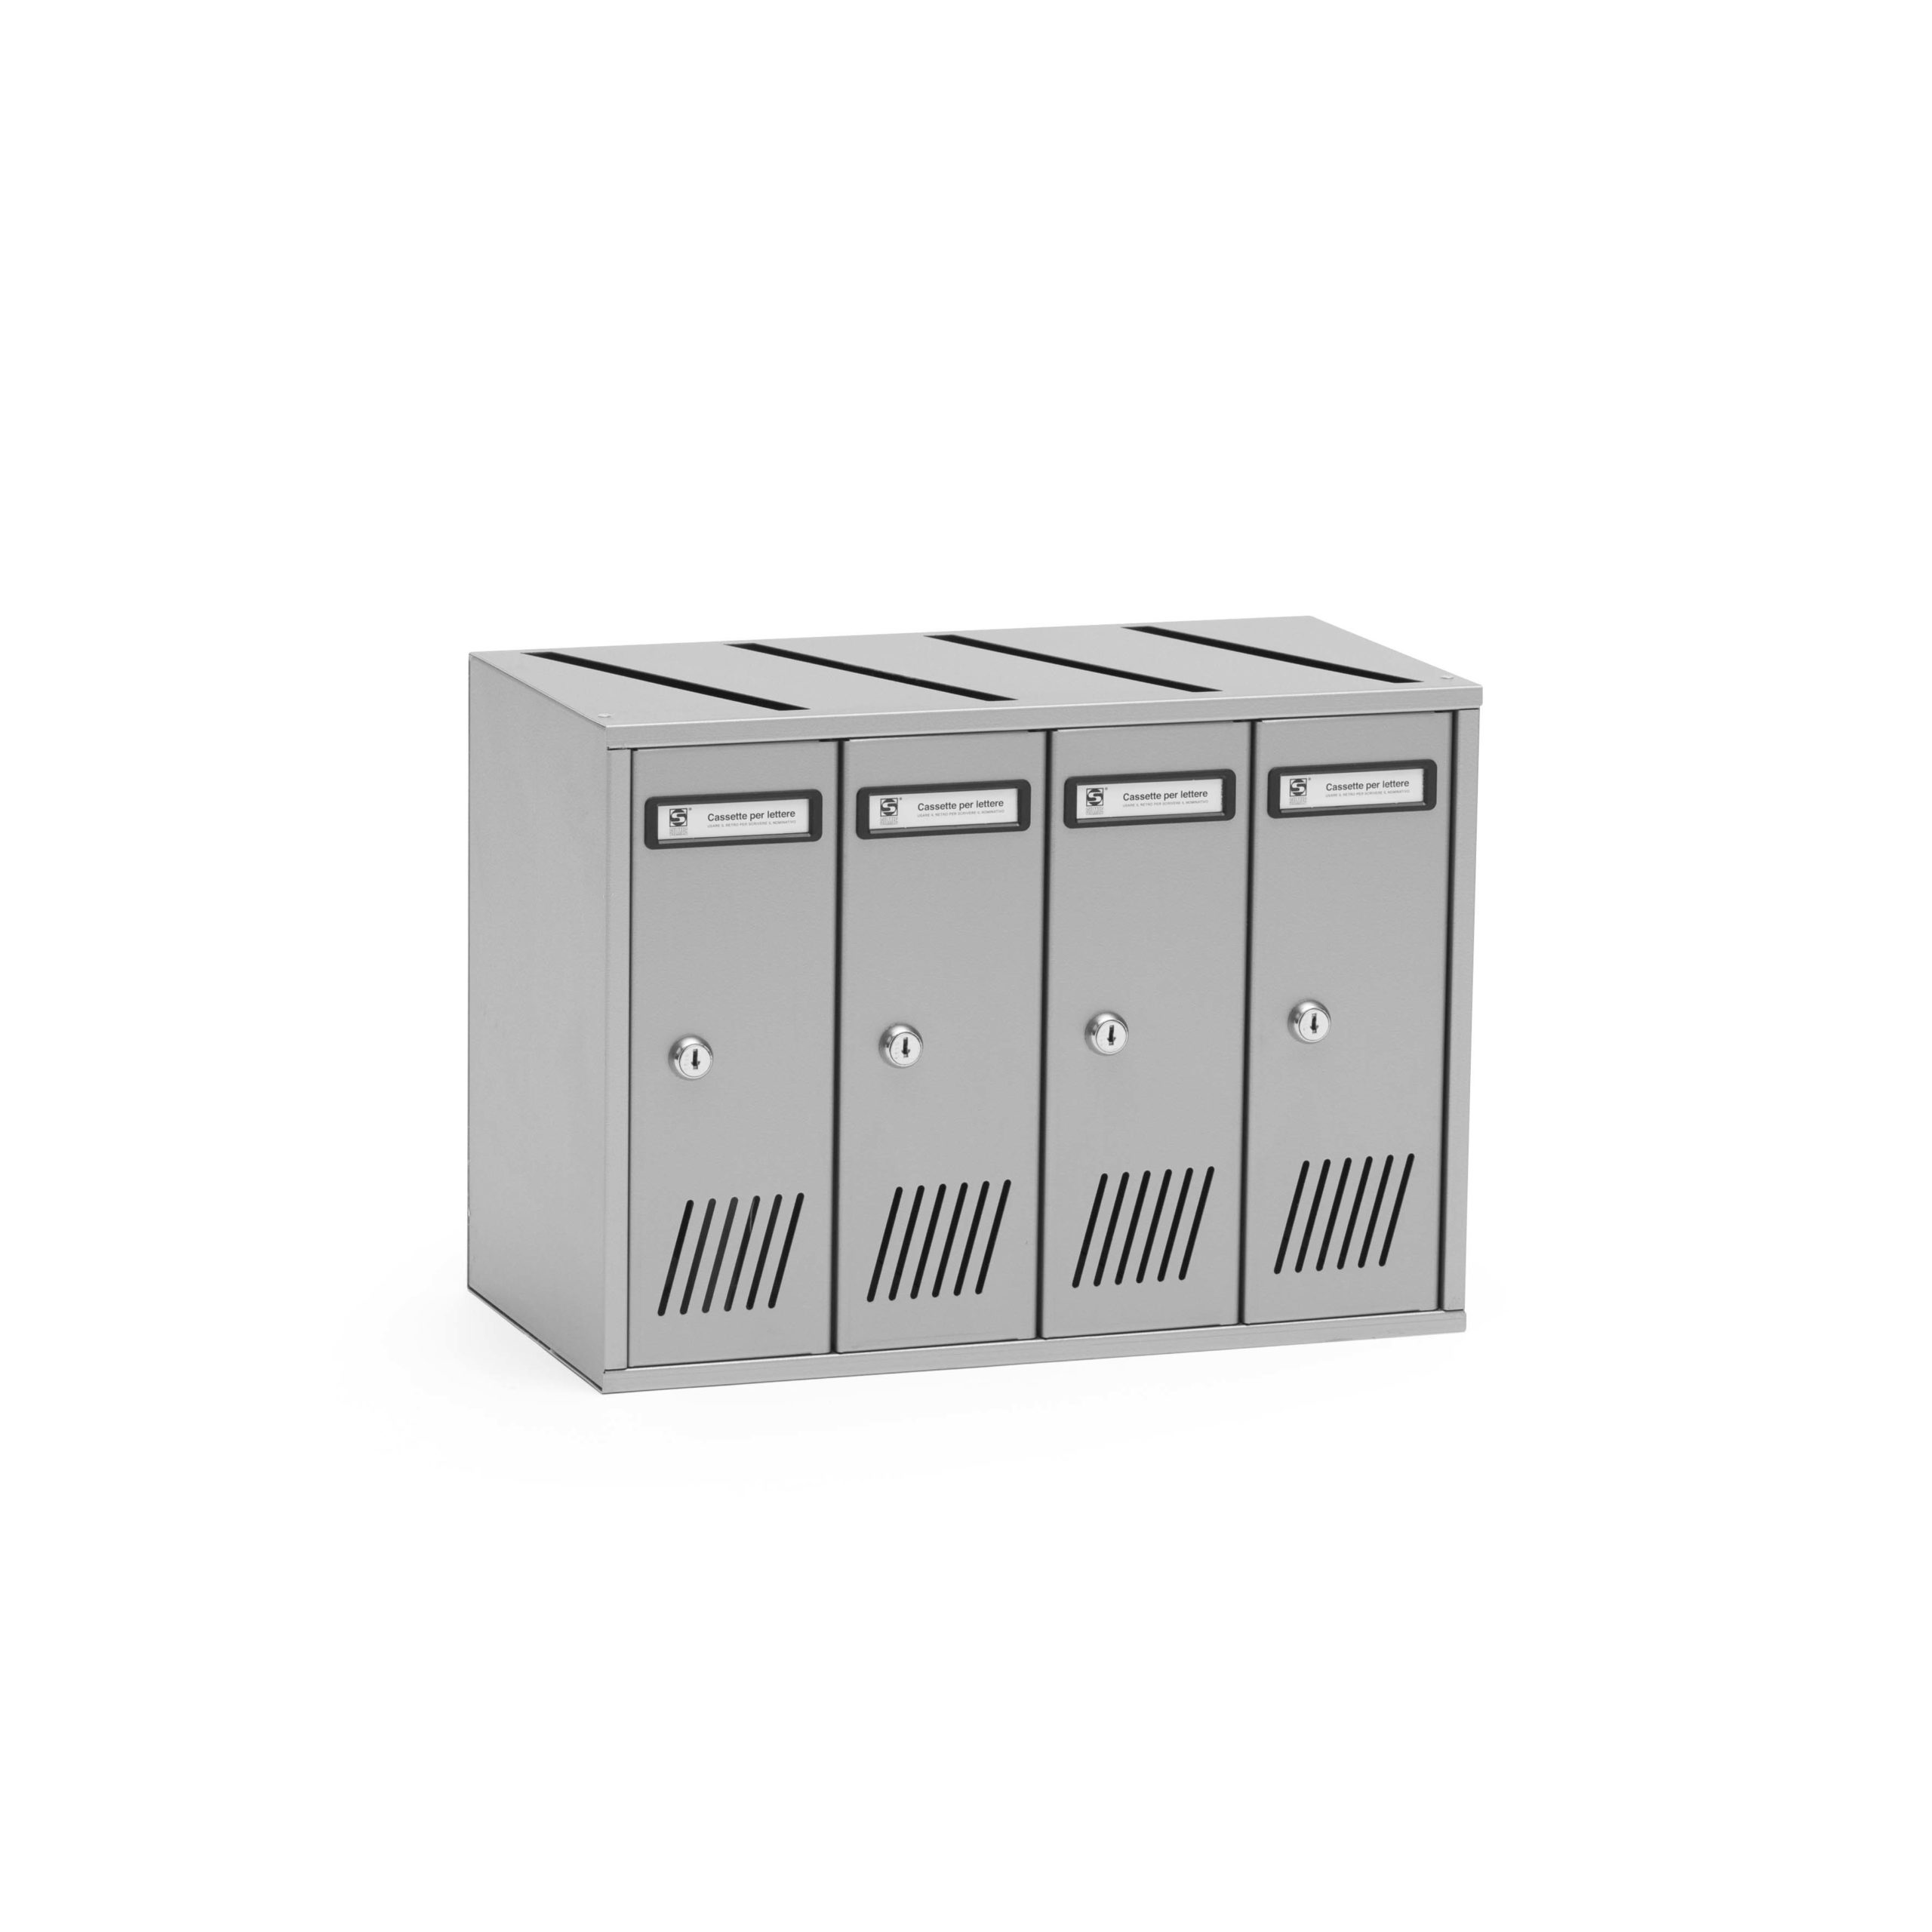 Standard modular letterbox units SC7V - 4 letterboxes